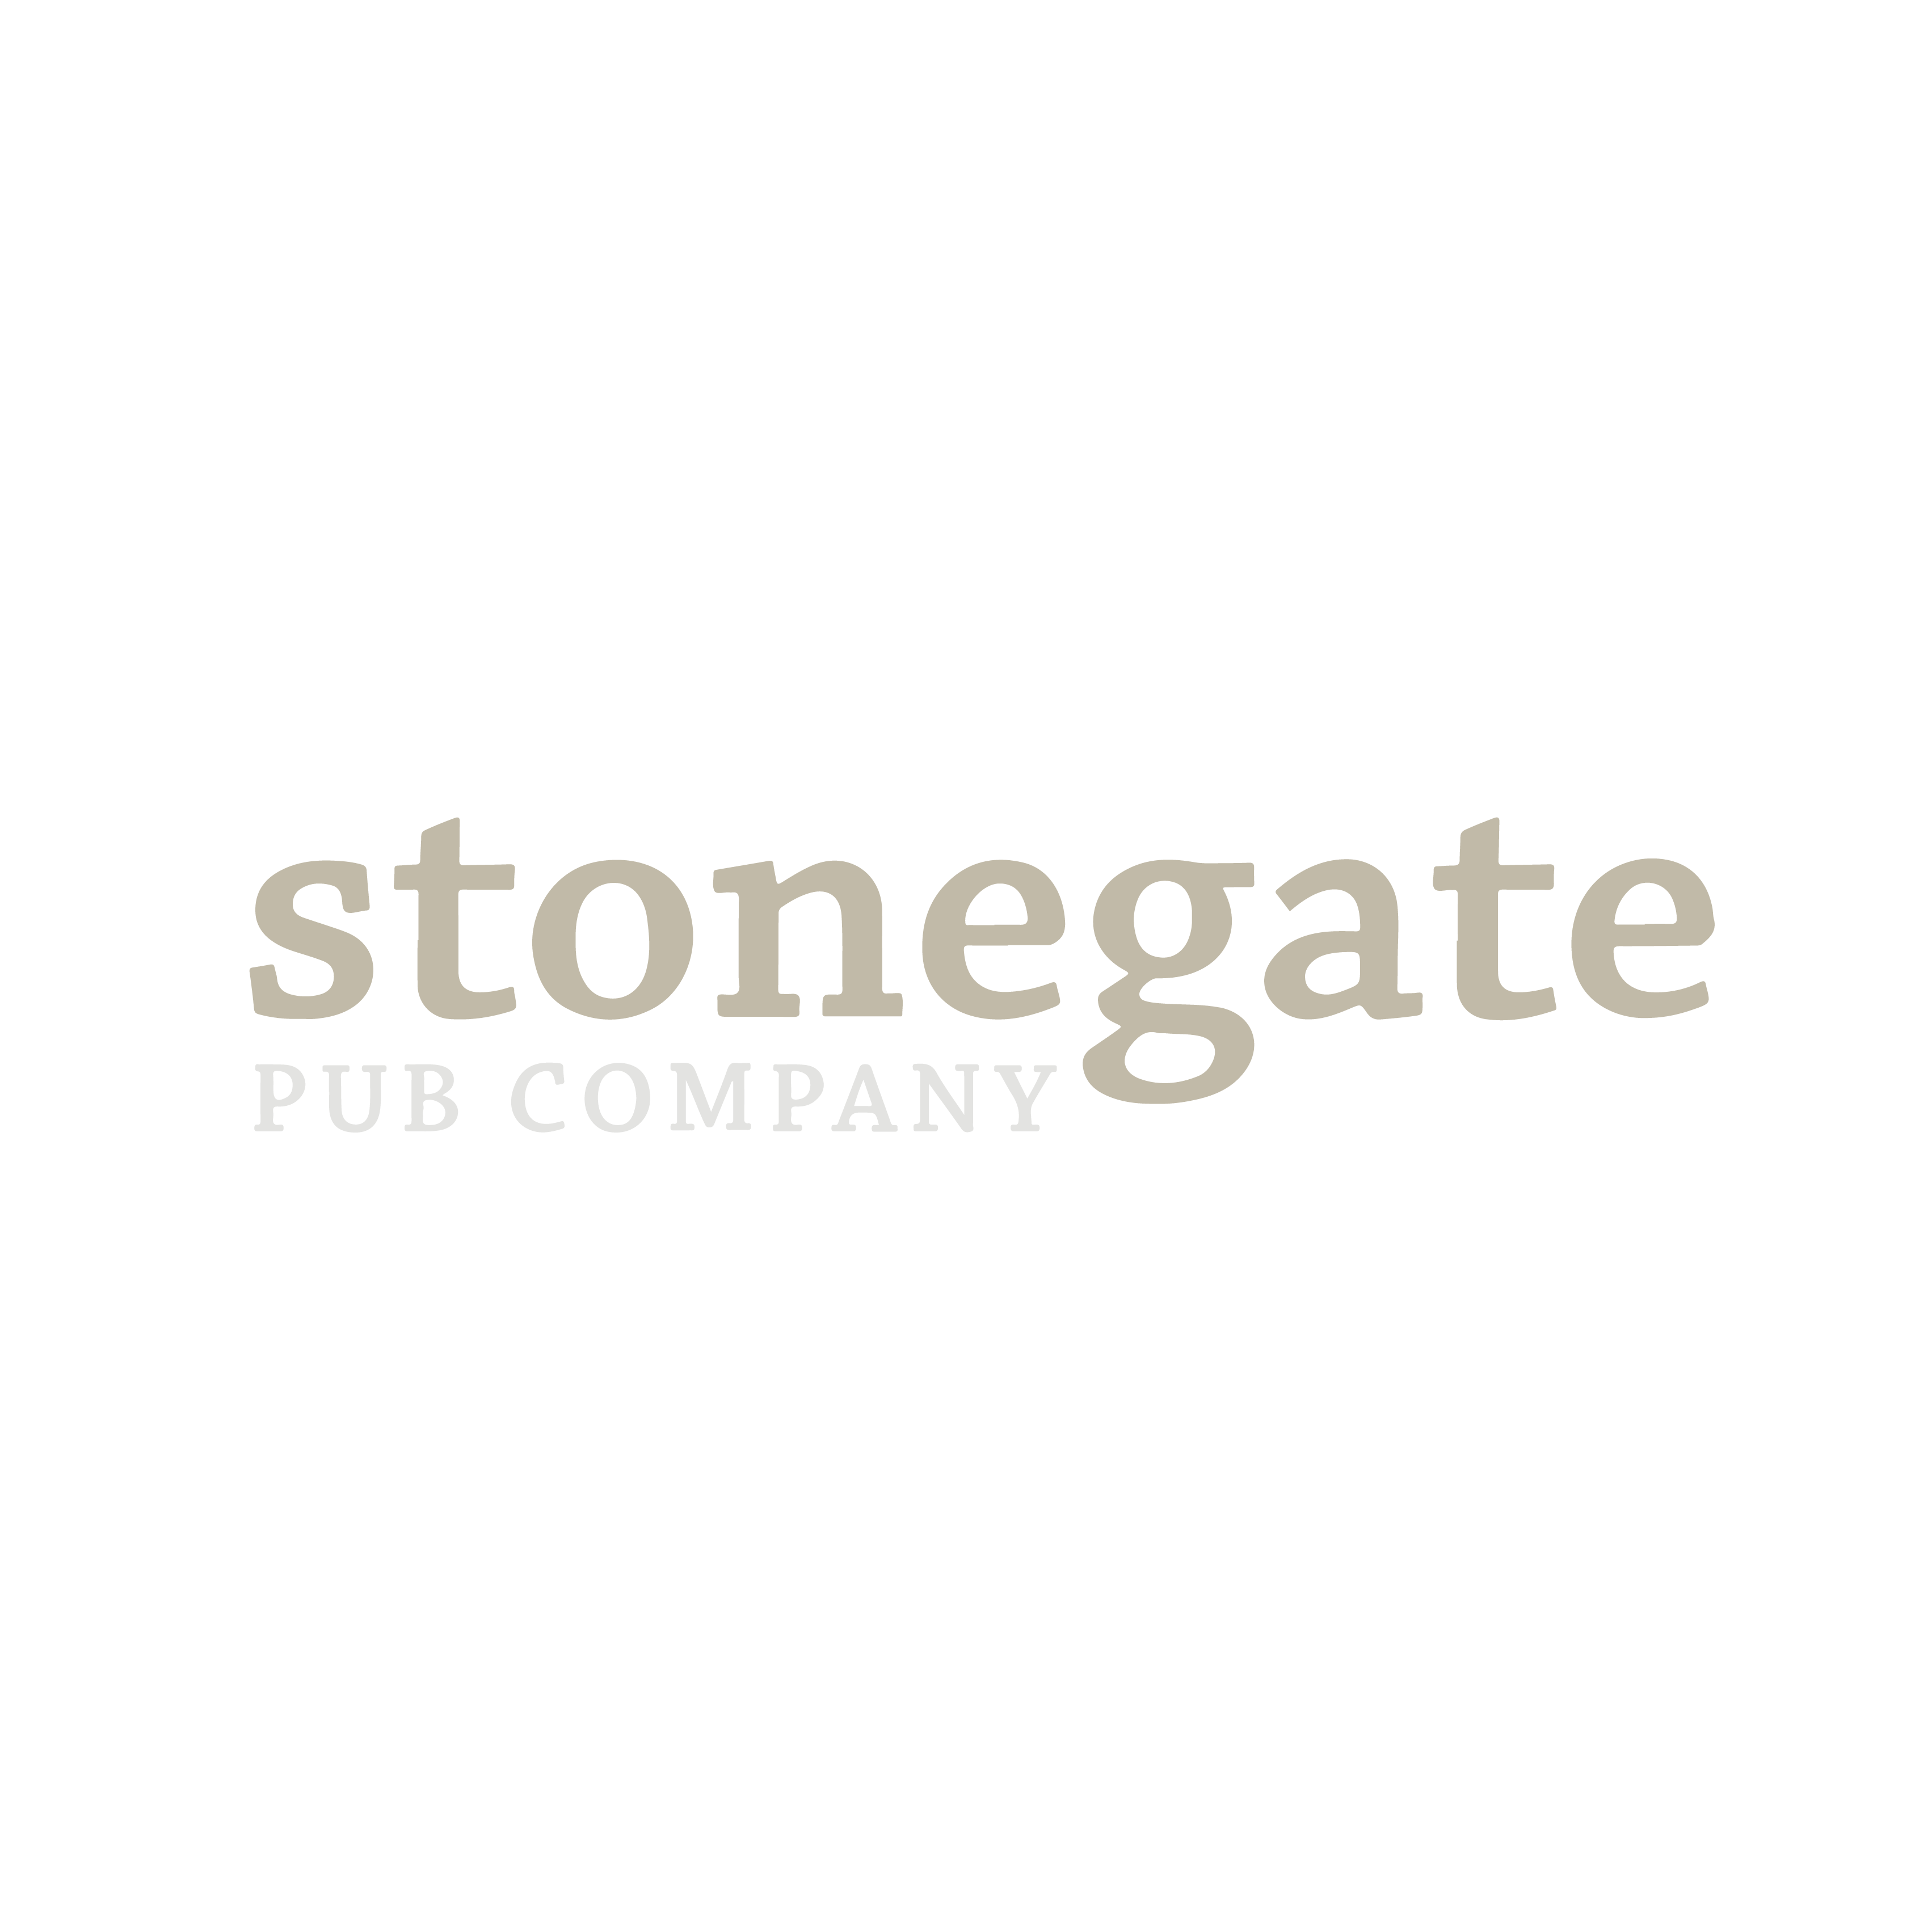 Stonegate Pub Co